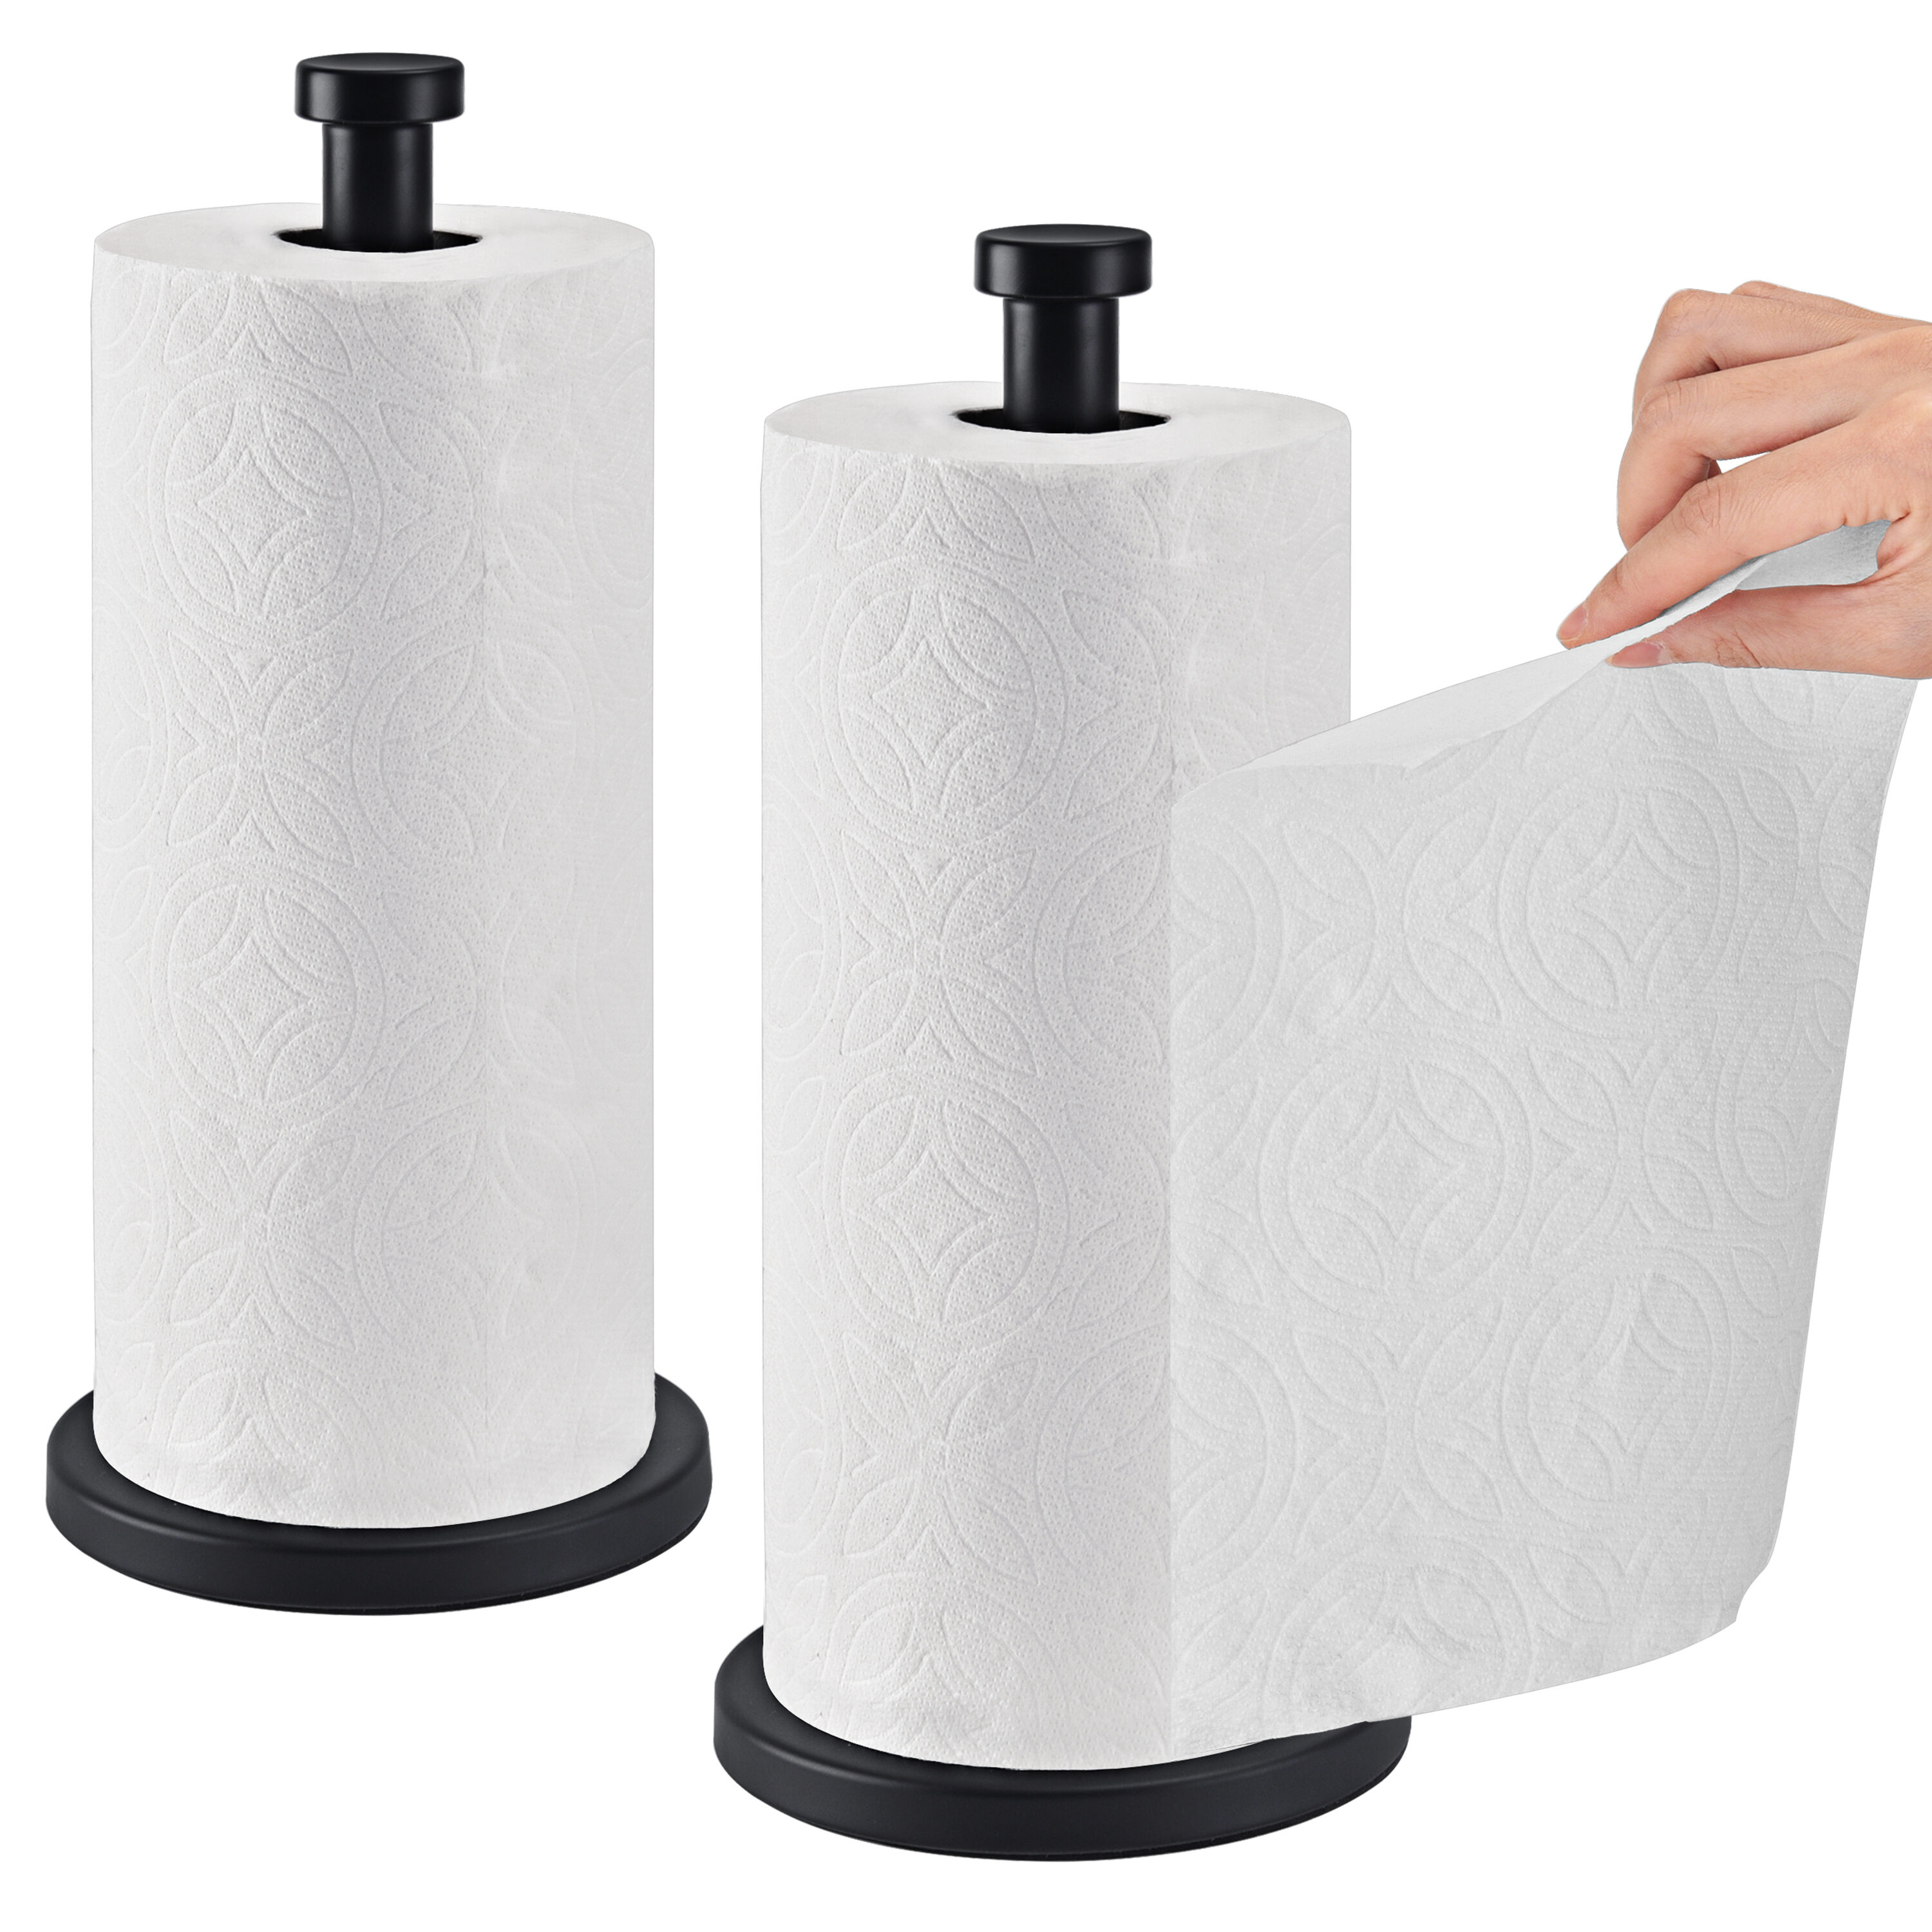 SMARTAKE Paper Towel Holder for One Hand Tear, Paper Towel